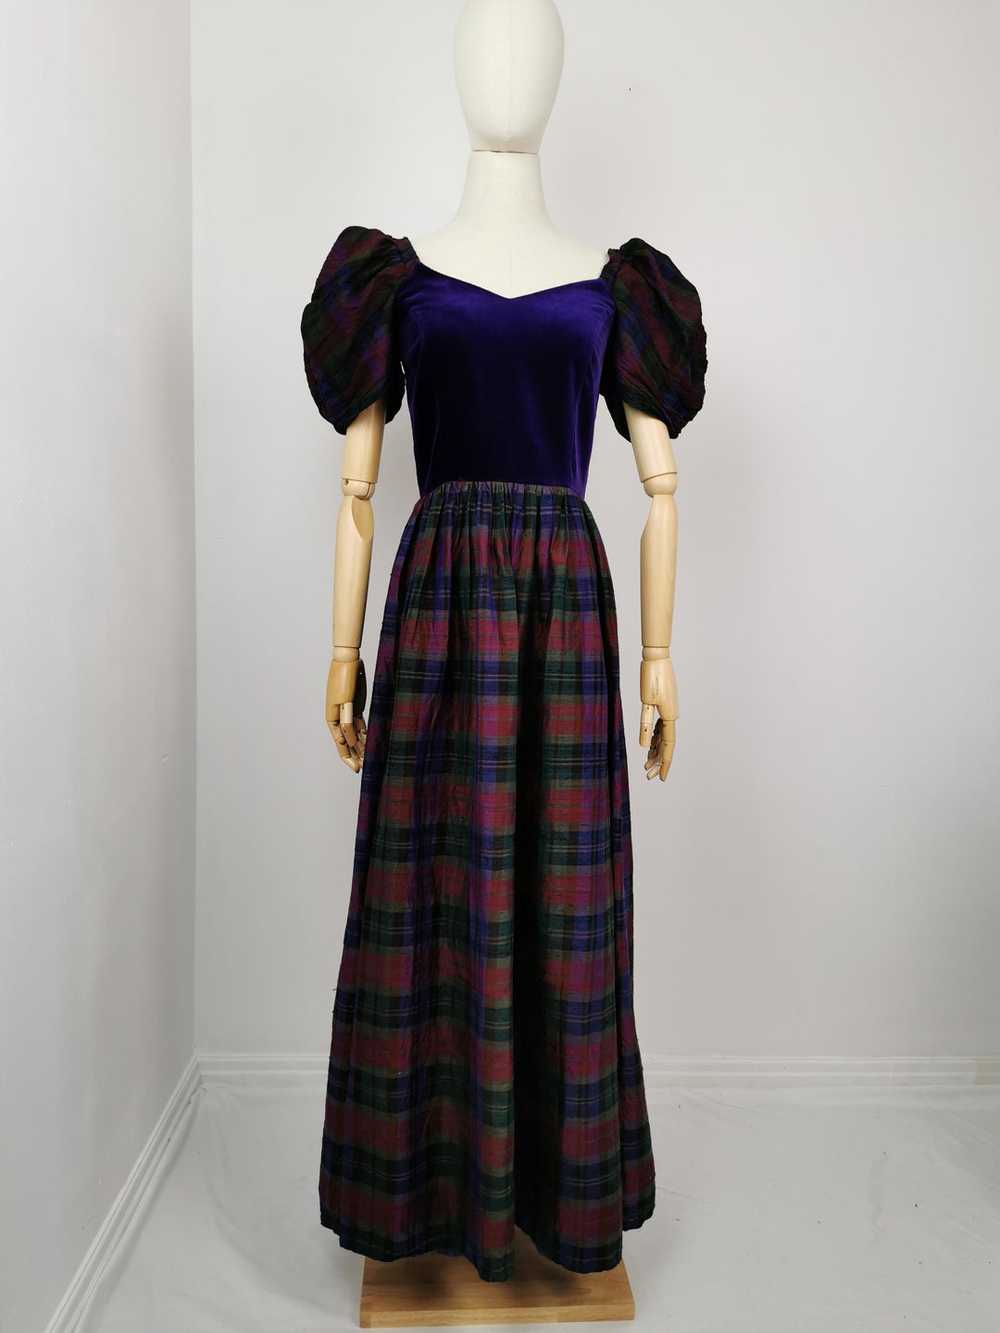 Vintage Marion Donaldson dress - image 1